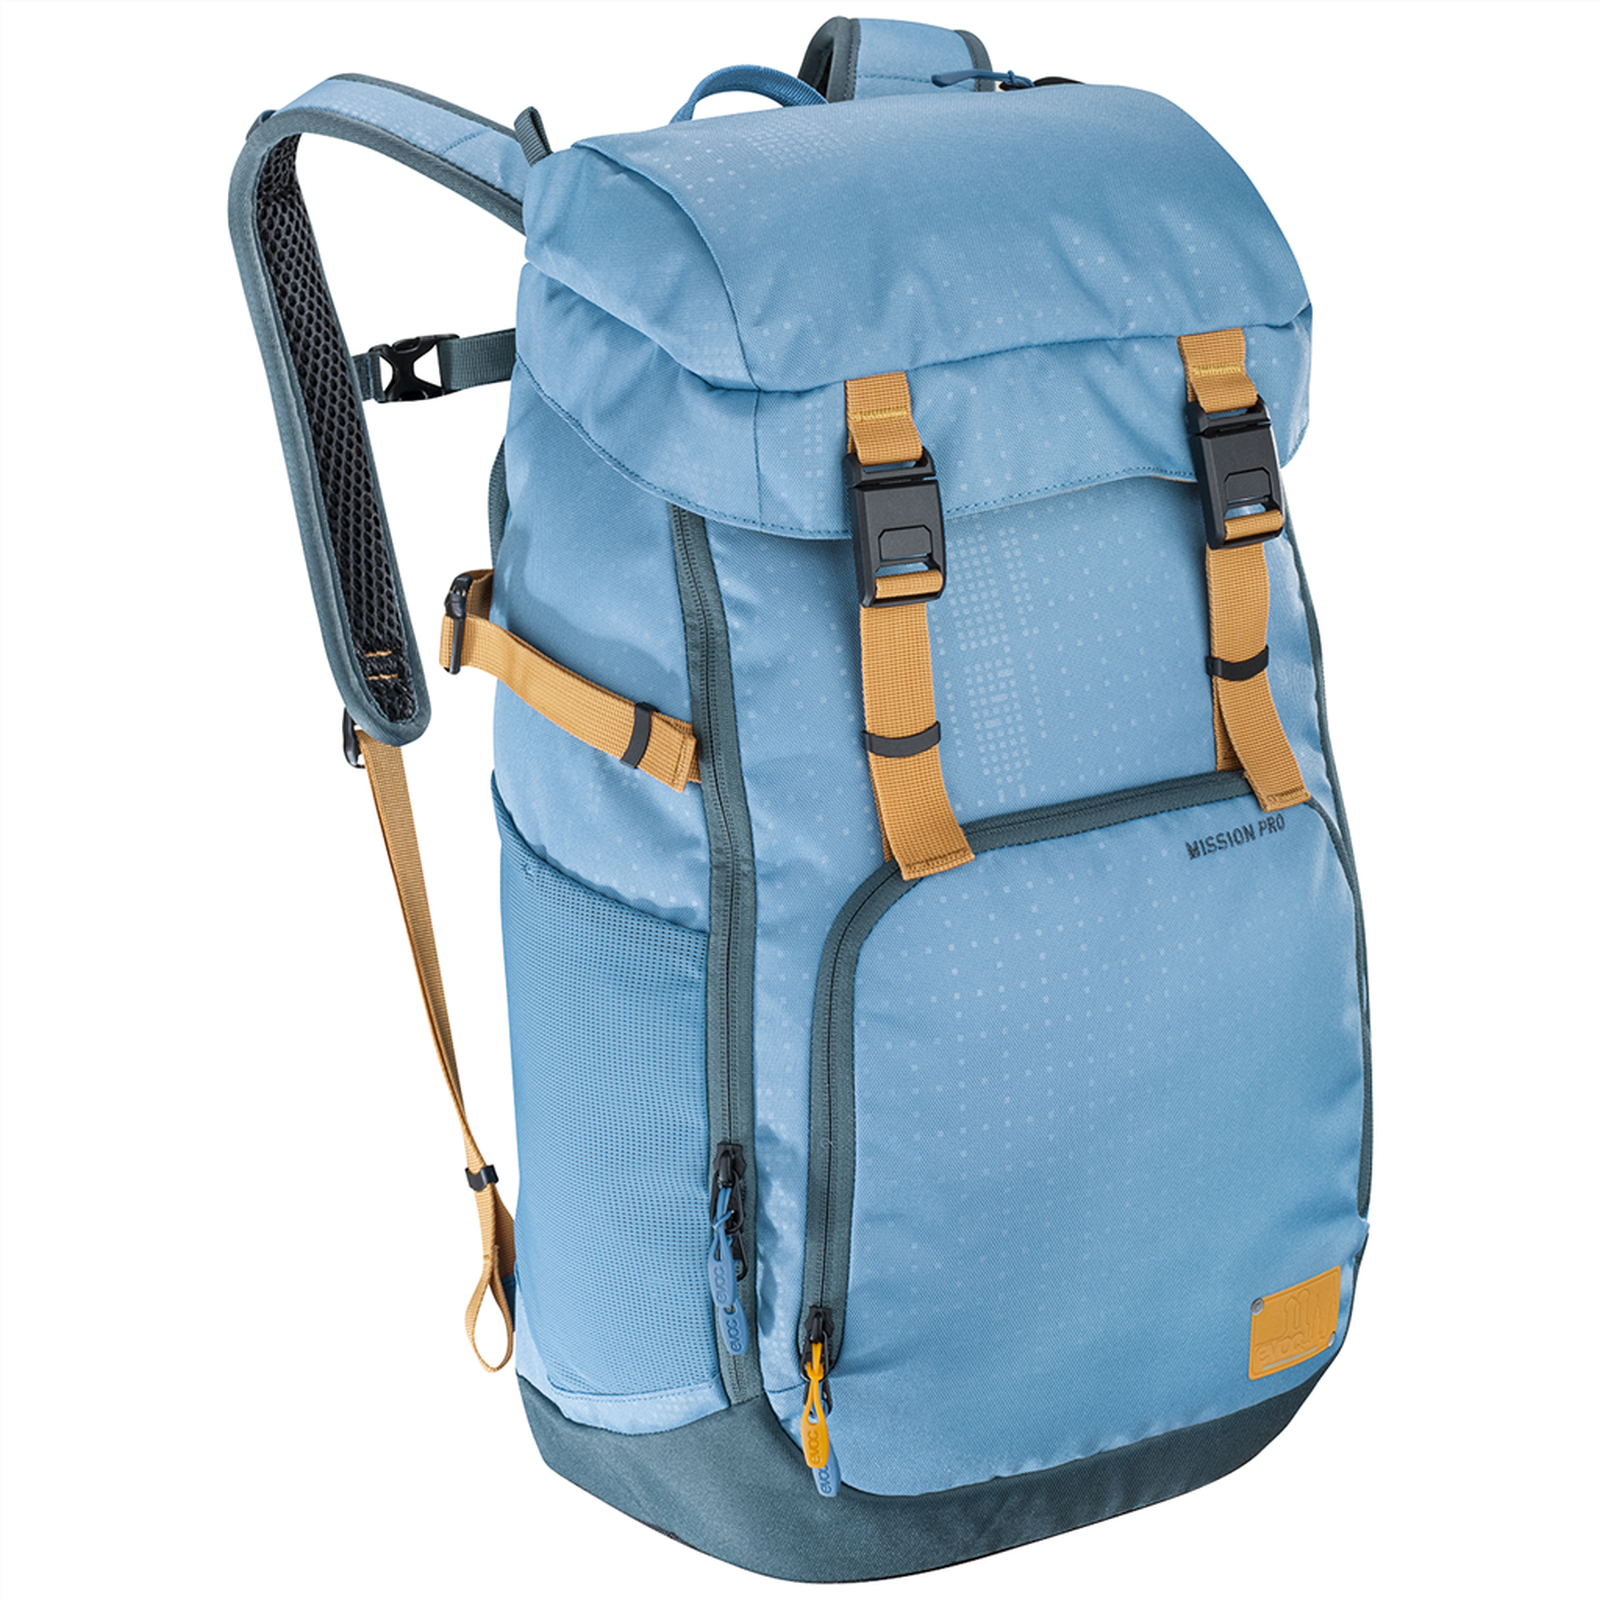 Mission Pro Backpack